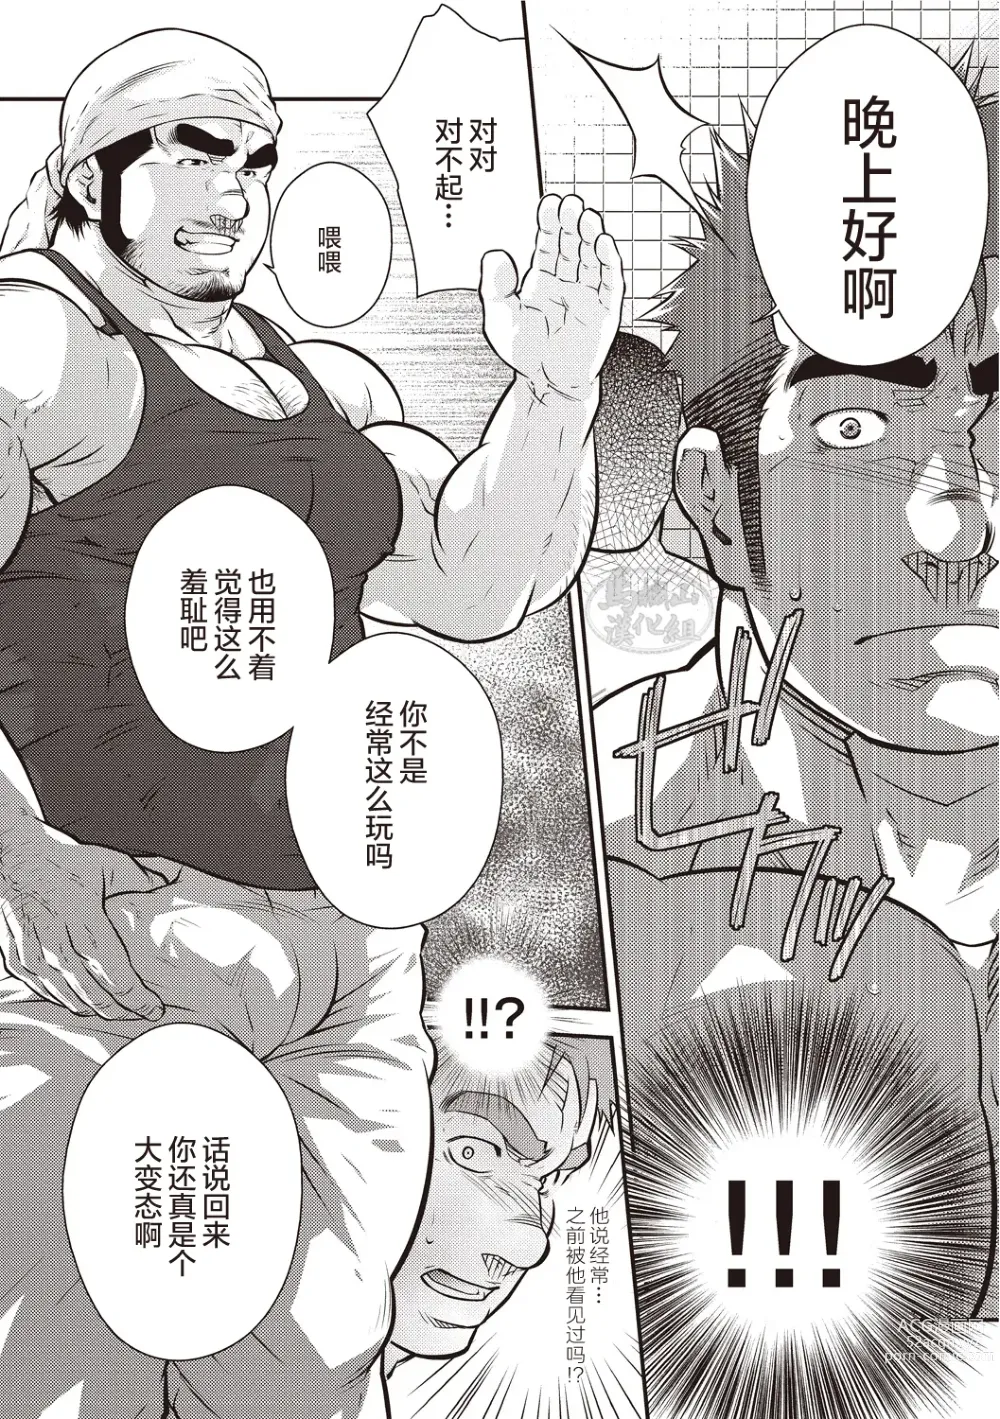 Page 5 of manga  激情男児!! 06 自恋的已婚肌肉男在公园里打飞机的话 / 梦中捆绑